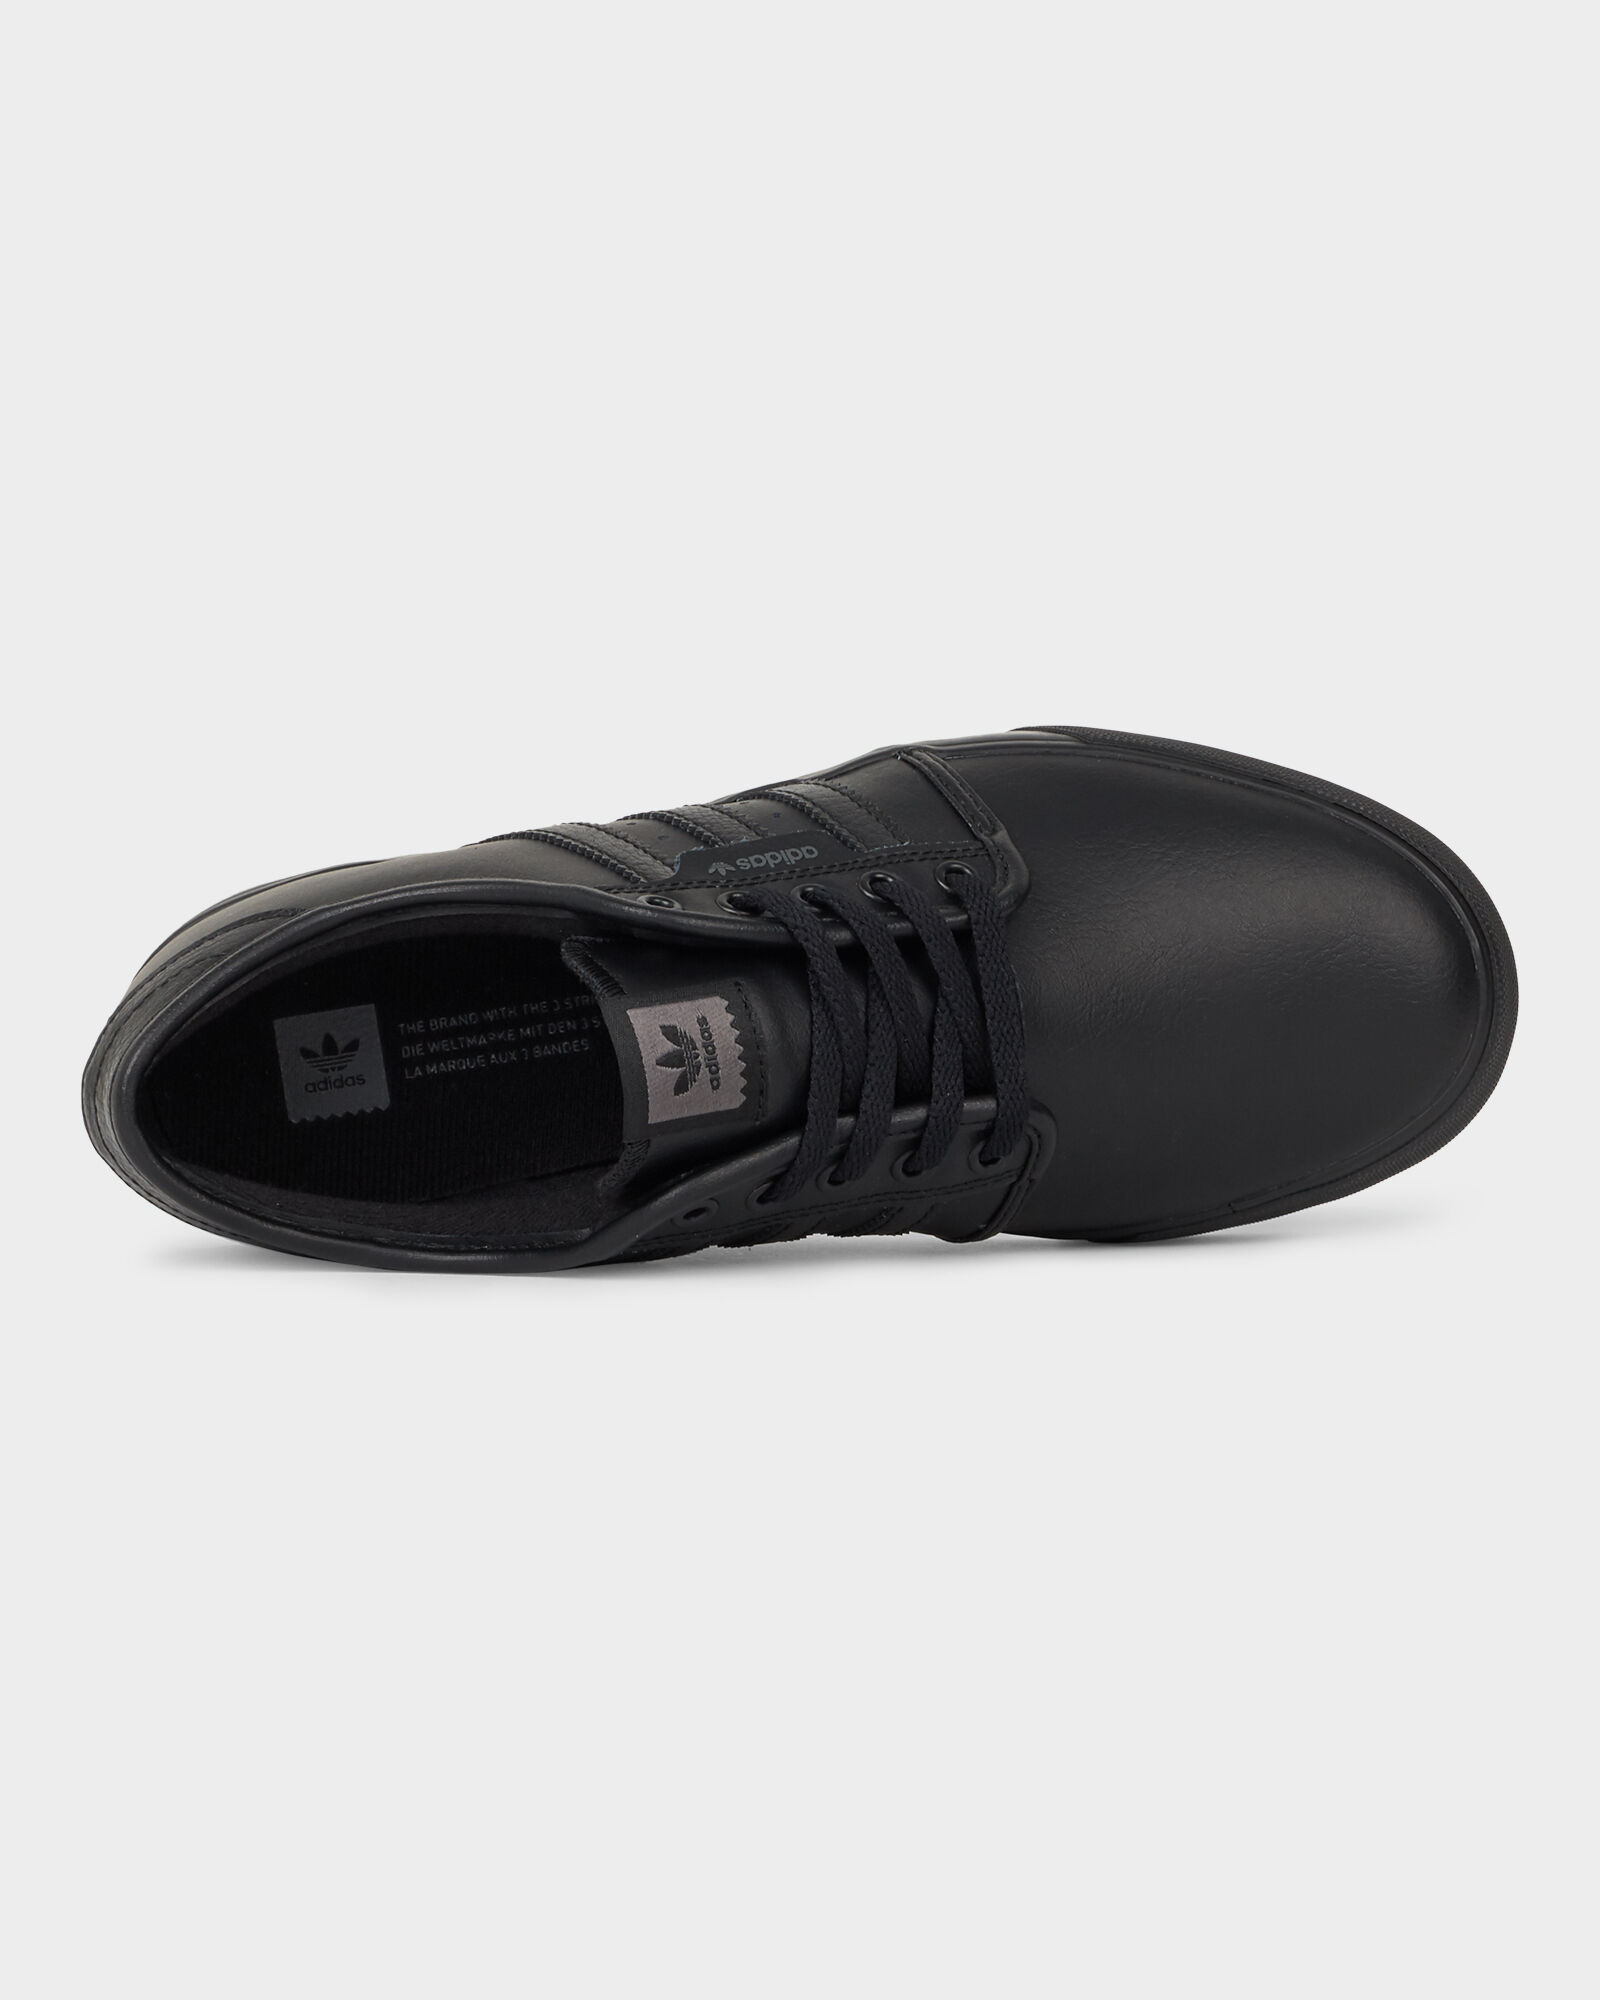 adidas seeley black leather